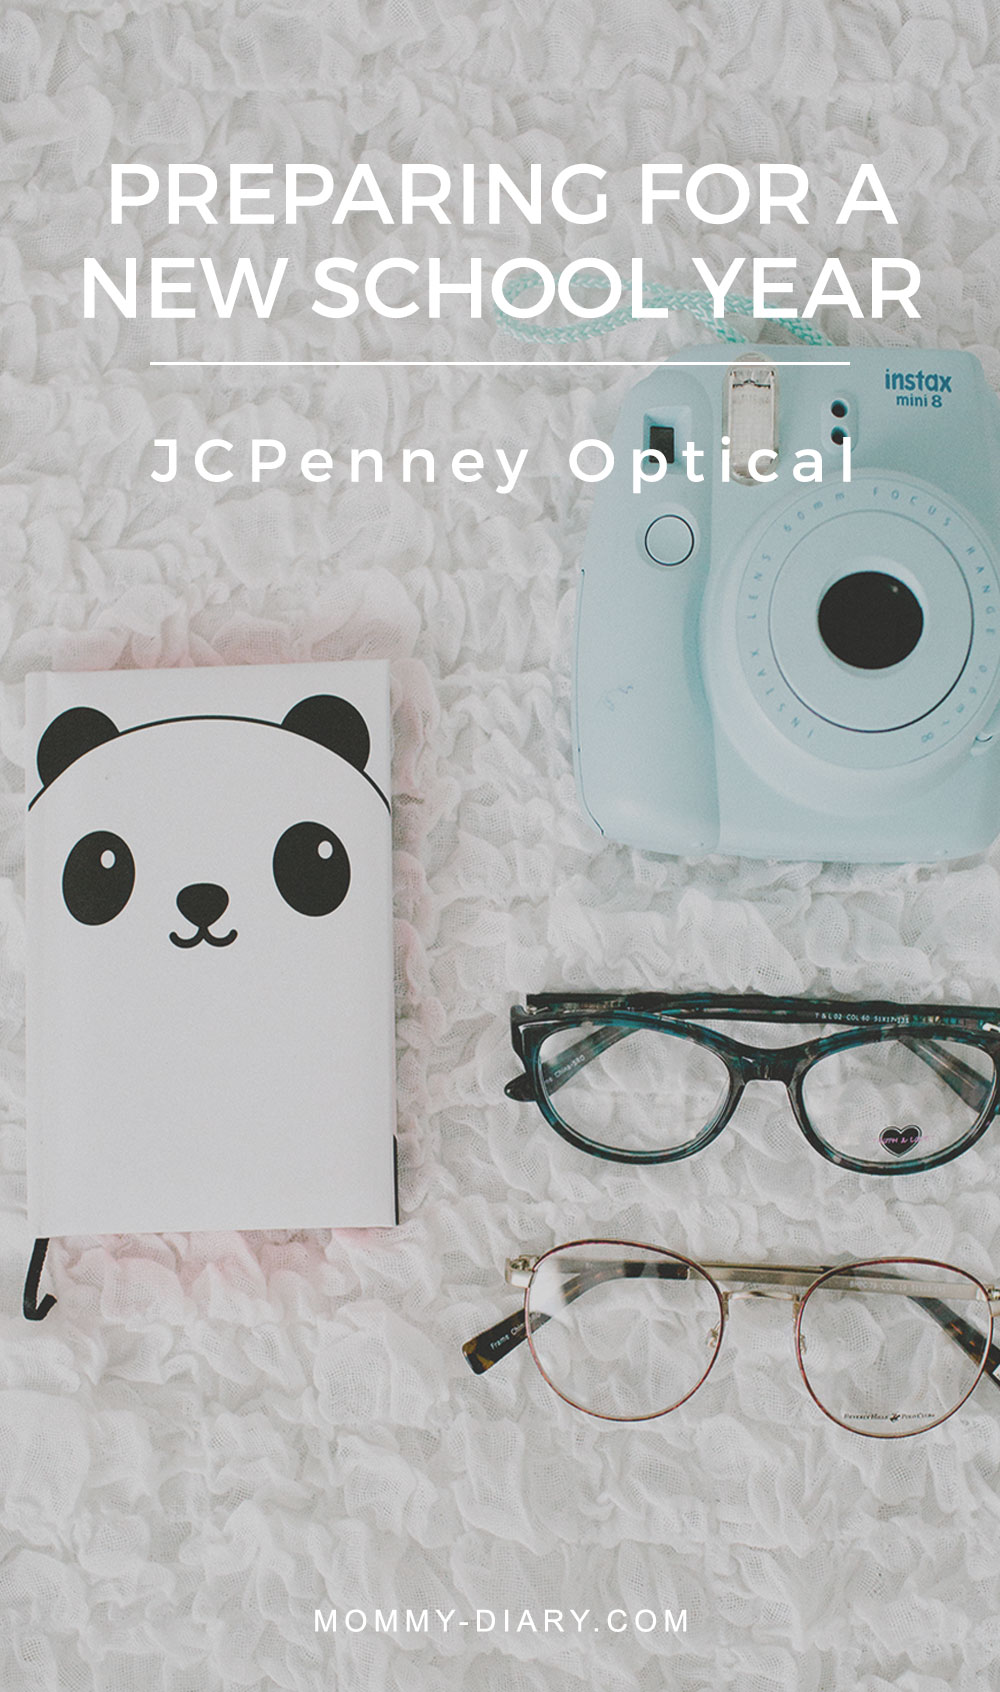 JCpenney-optical-pinterest